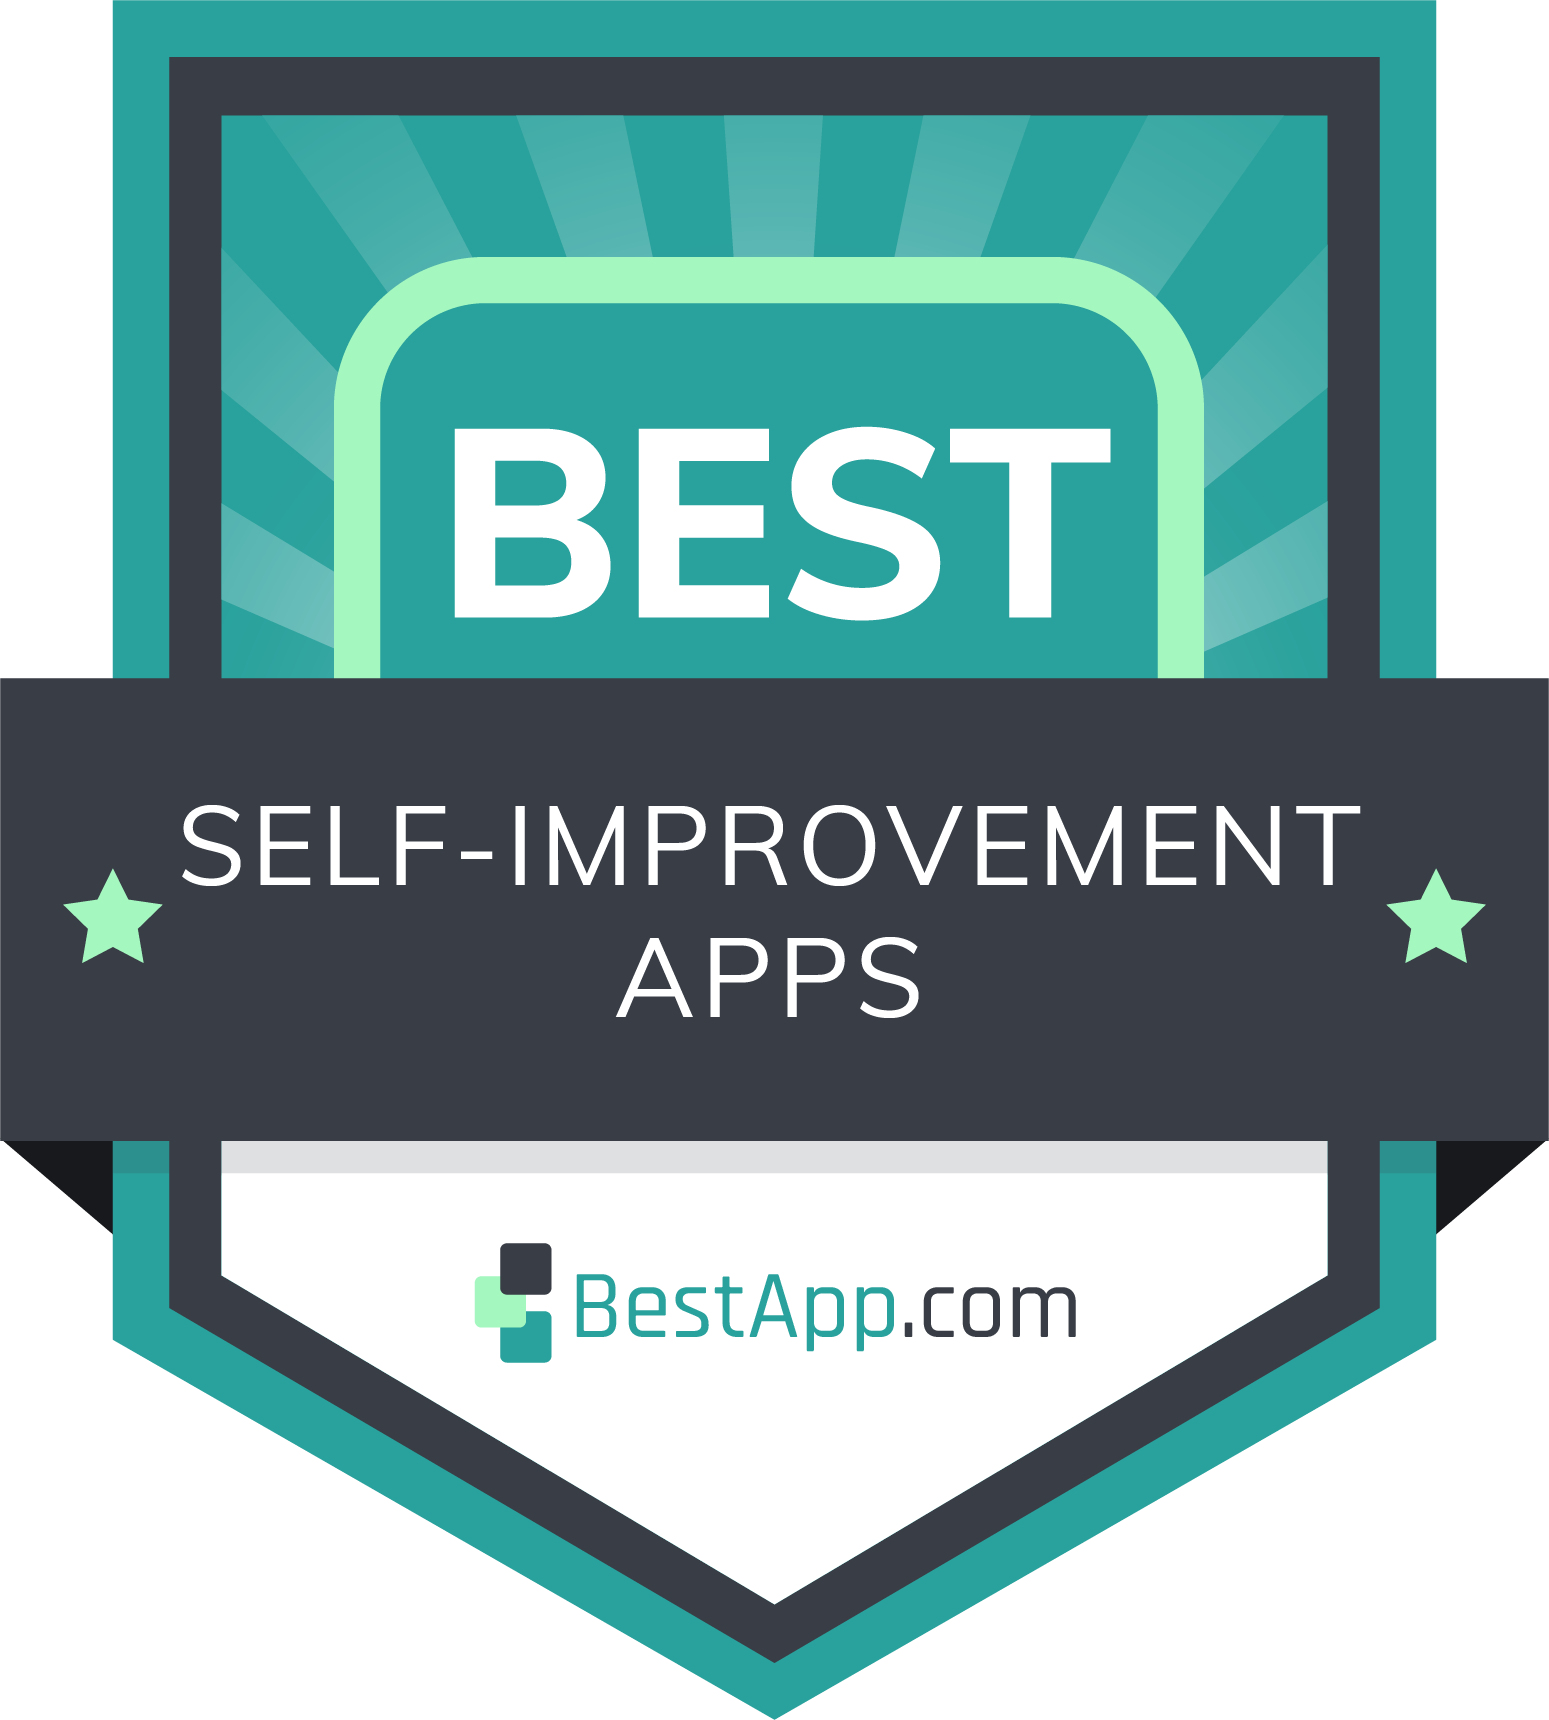 Best Self-Improvement Apps Badge